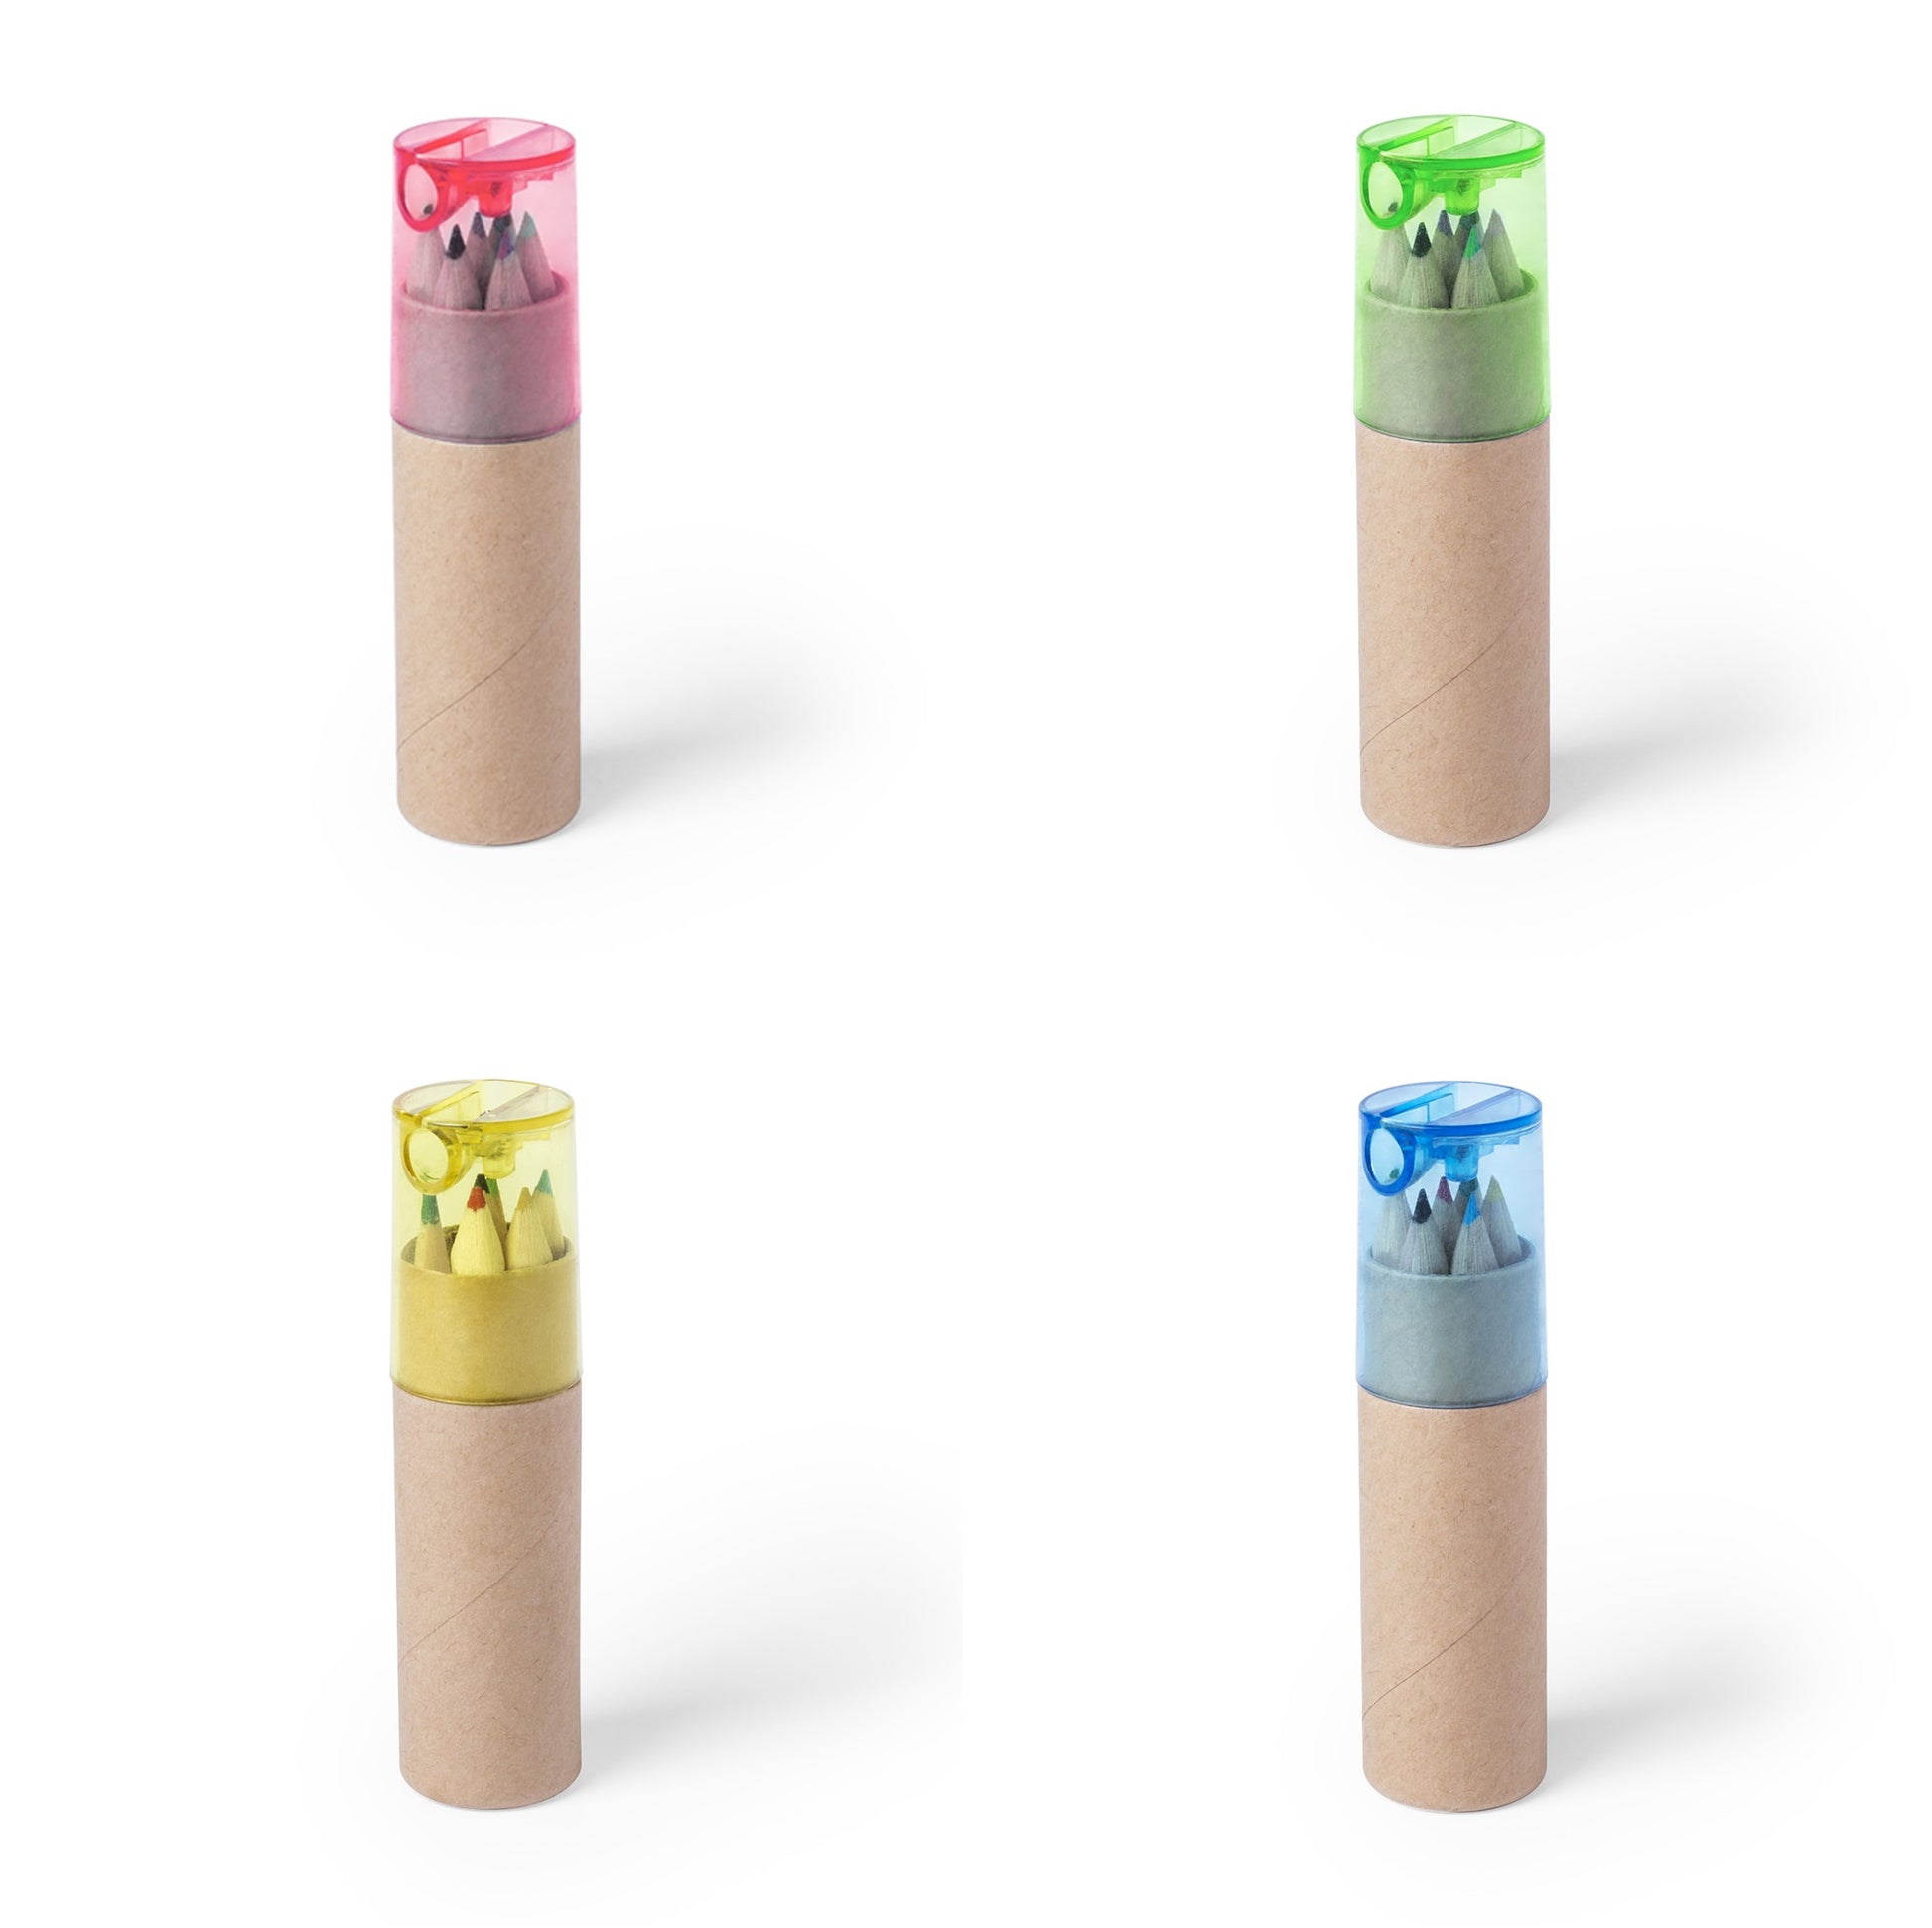 Set crayon en carton recyclé et taille crayon BABY coloris multiples